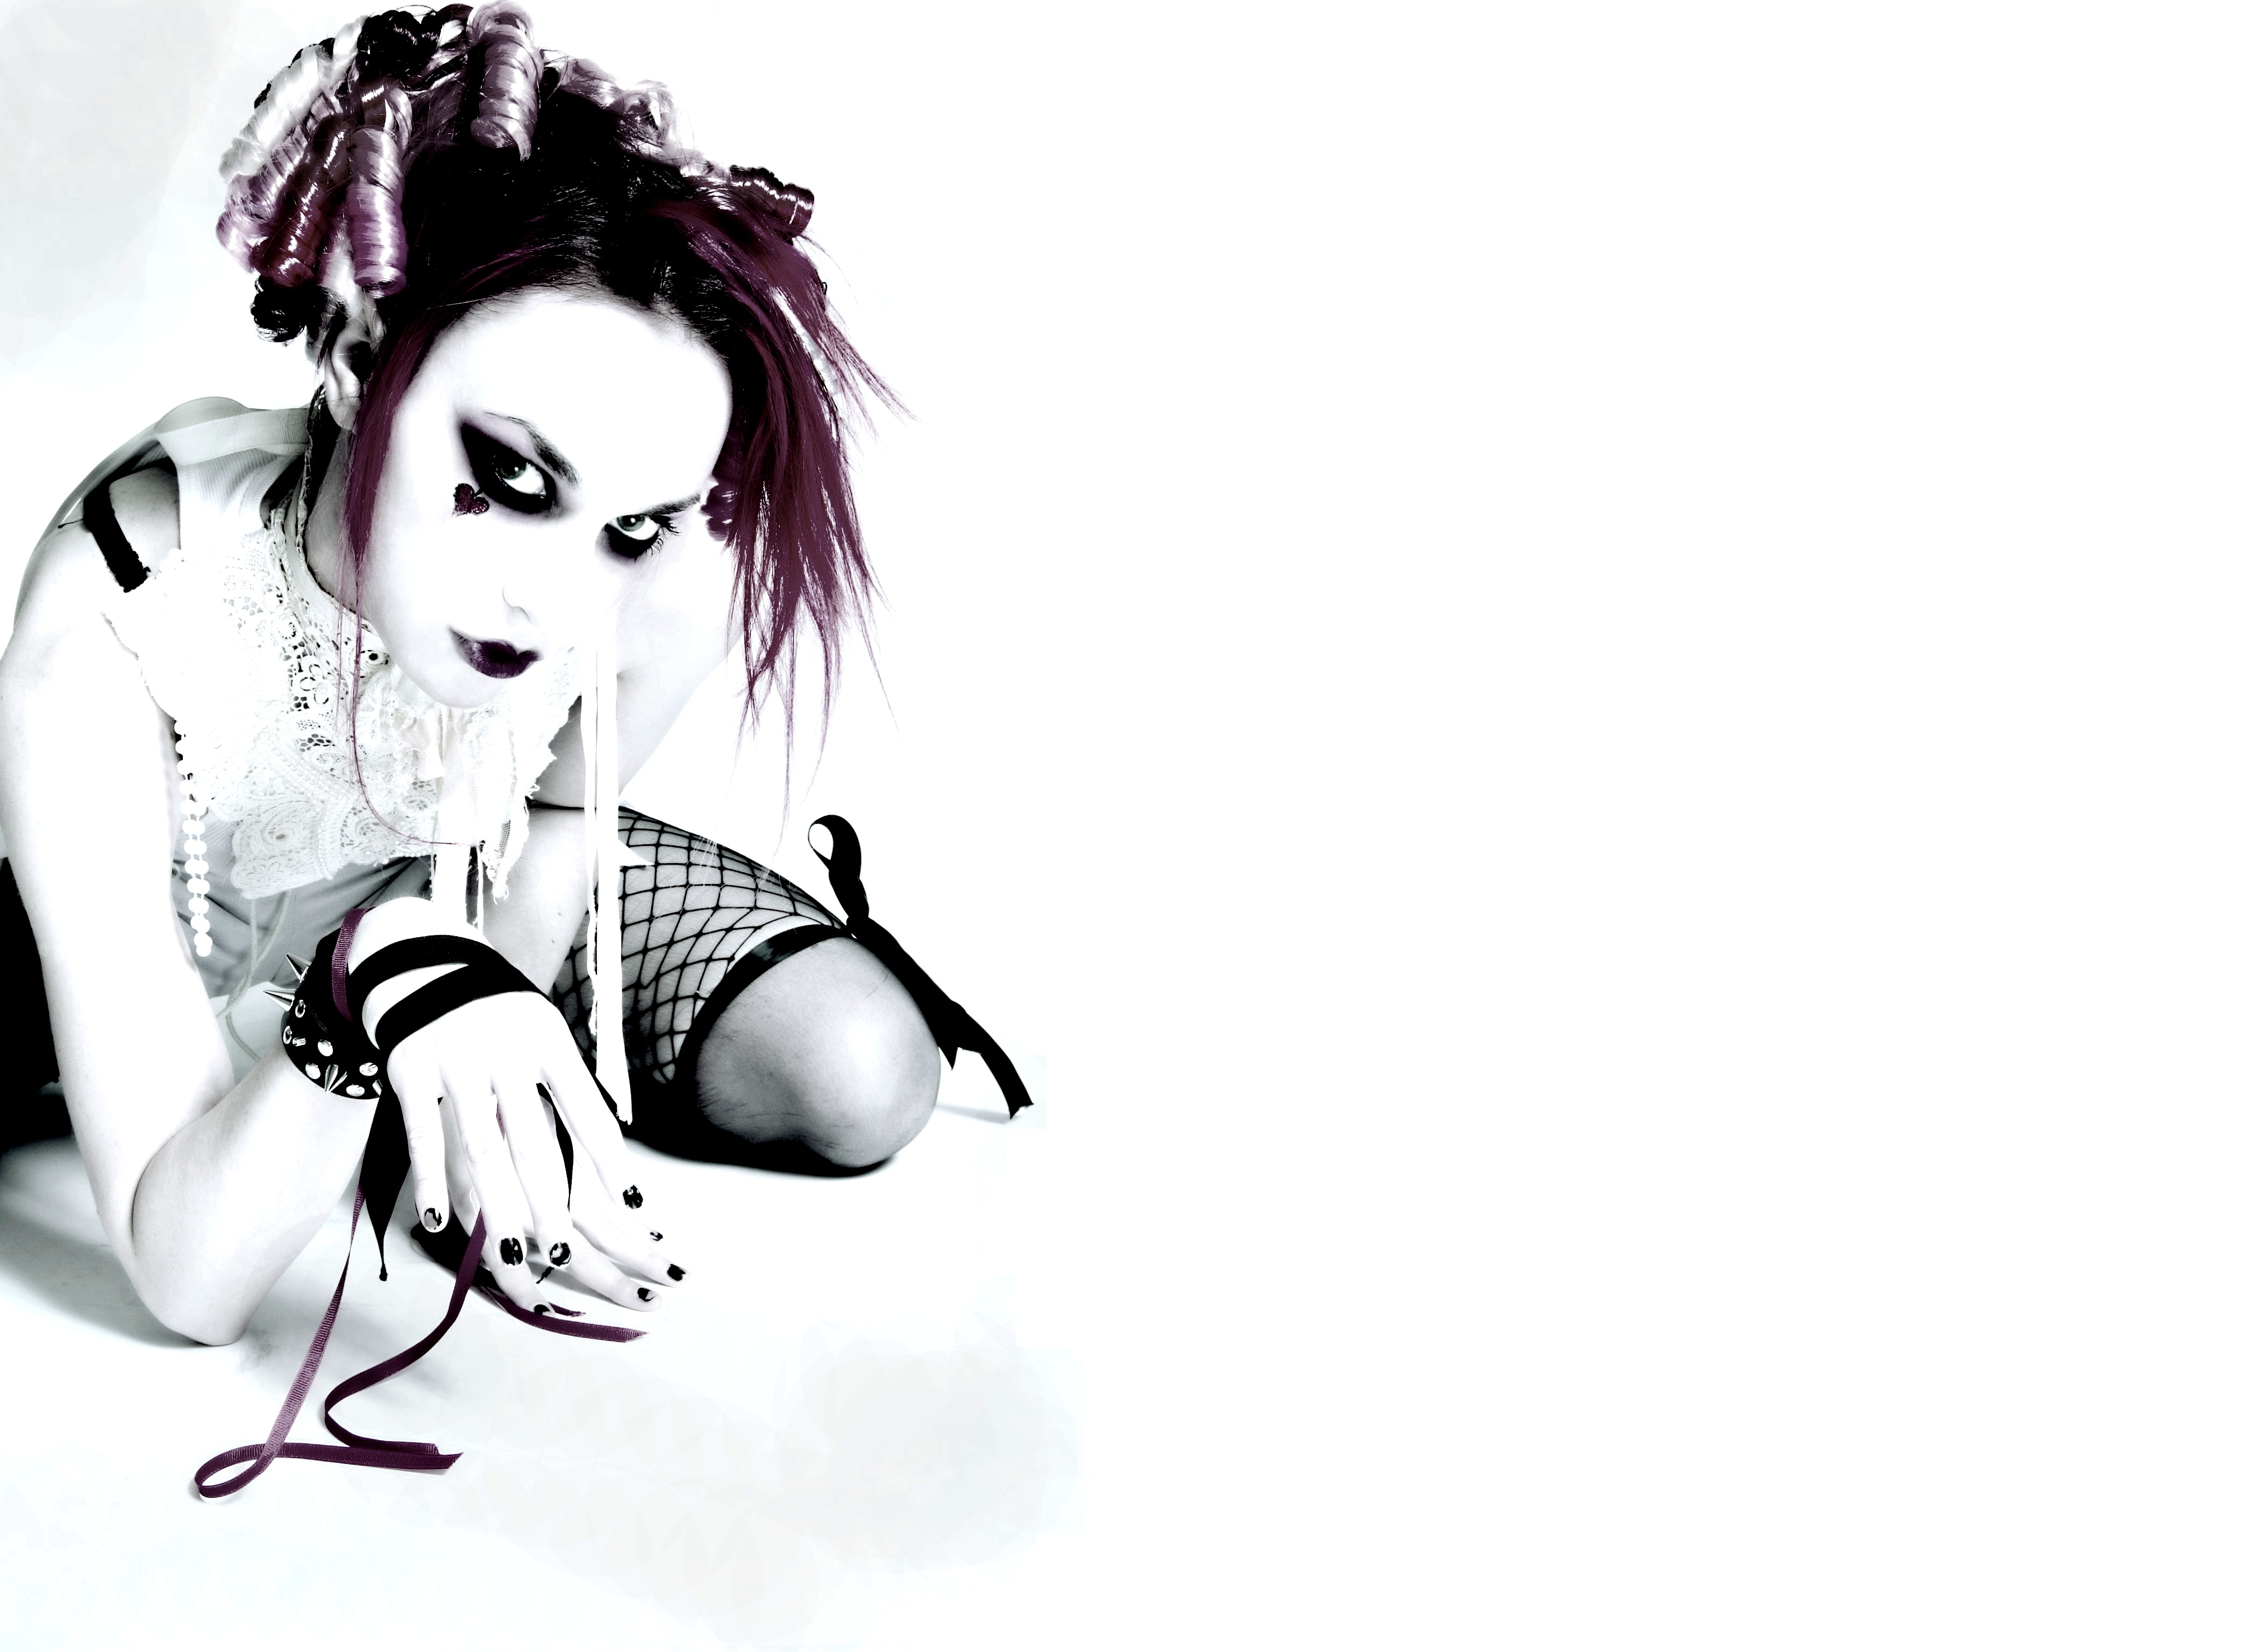 Caliente Emilie Autumn wallpaper   ForWallpapercom 4208x3072